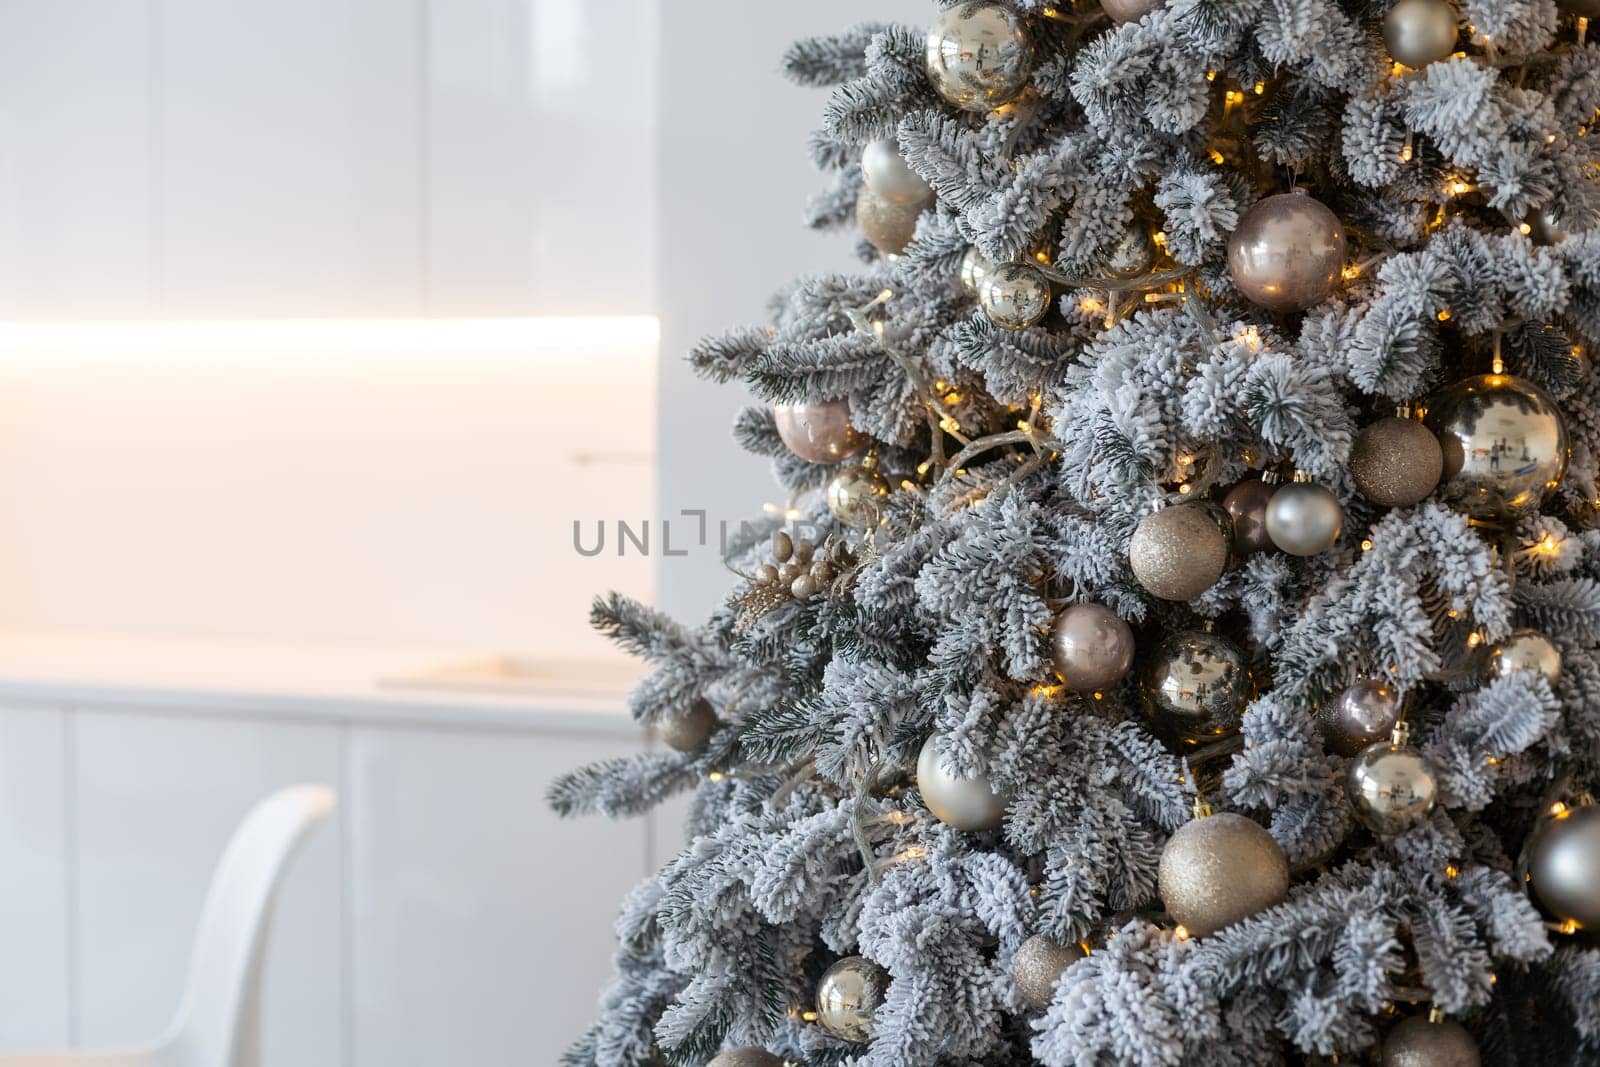 Christmas Home Interior with White Christmas tree